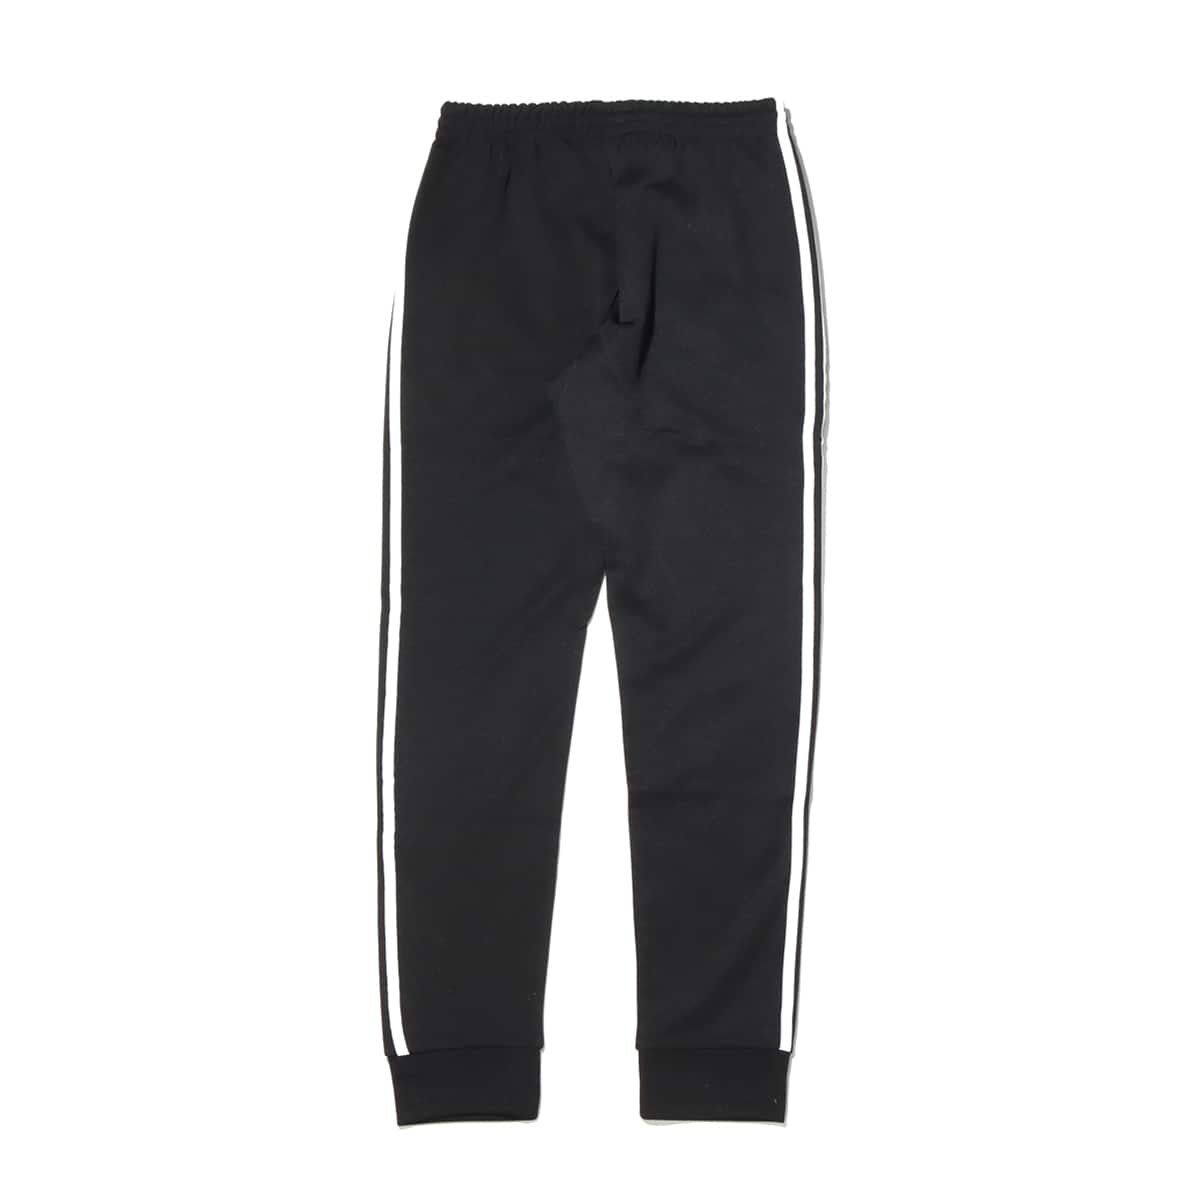 Adidas Originals SST Mens Track Jogger Pants Black/White GF0210 NEW Multi Sz